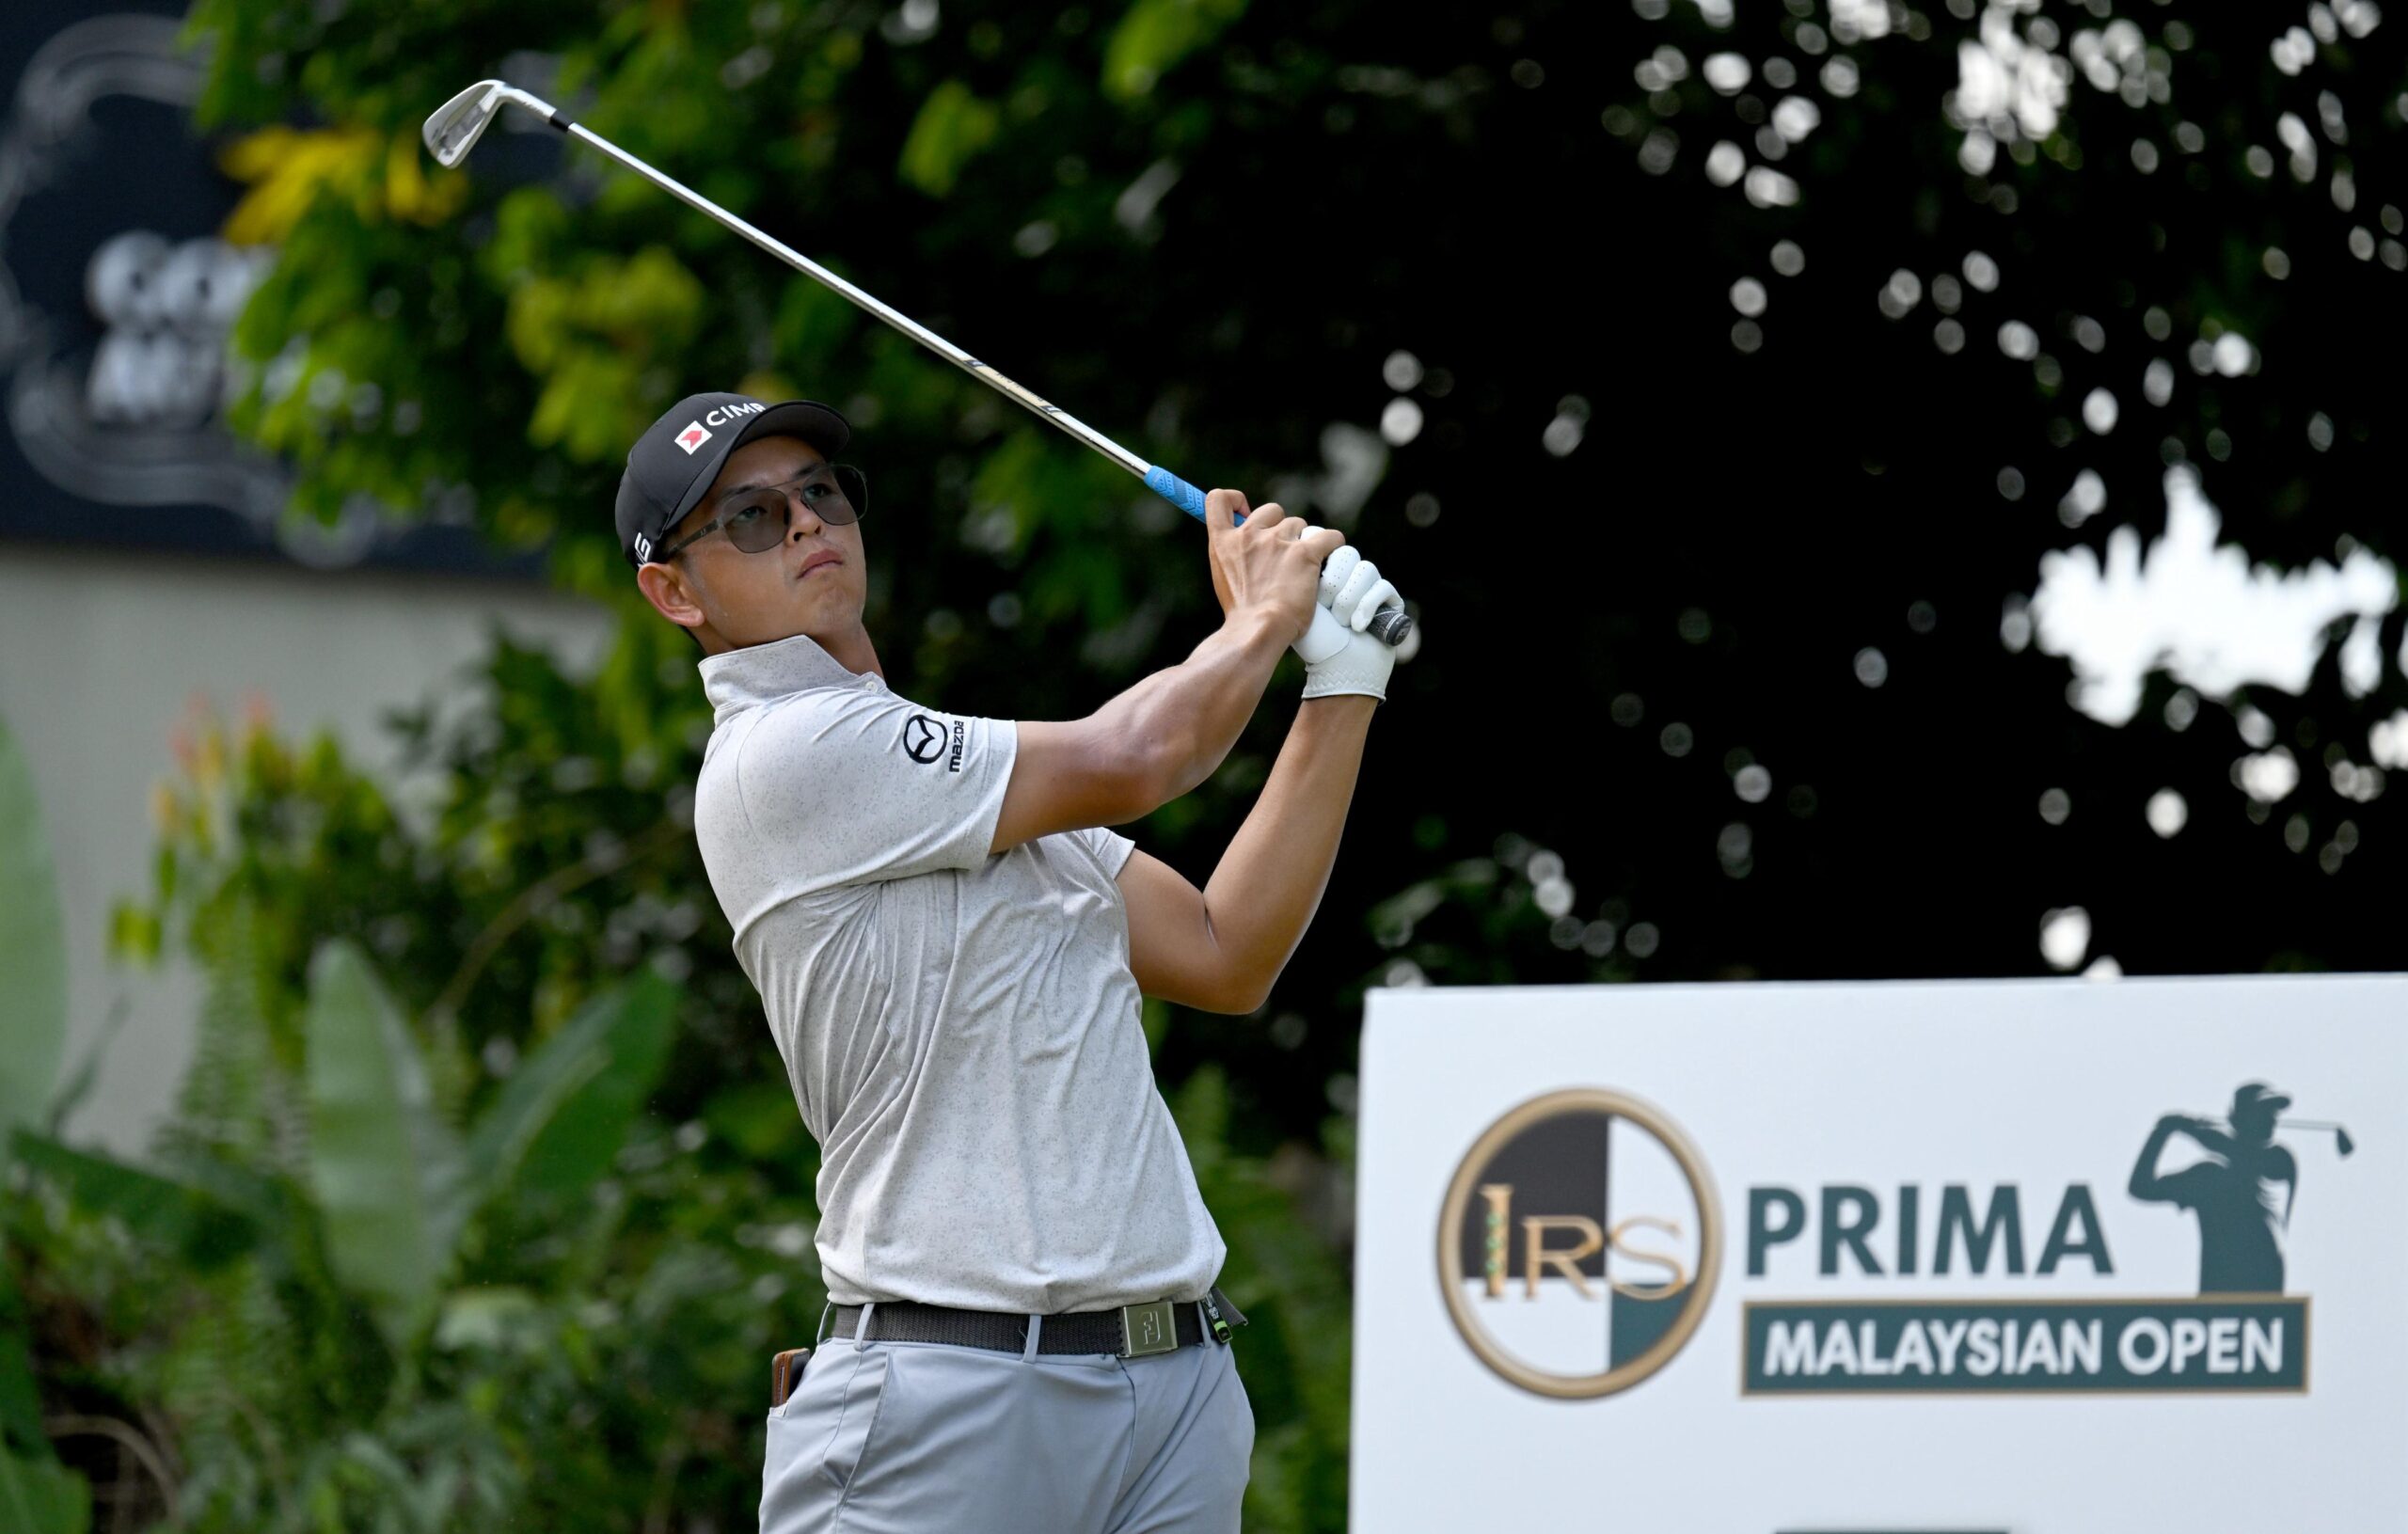 Malaysian Open: Ervin strikes six birdies, two eagles in a stellar performance